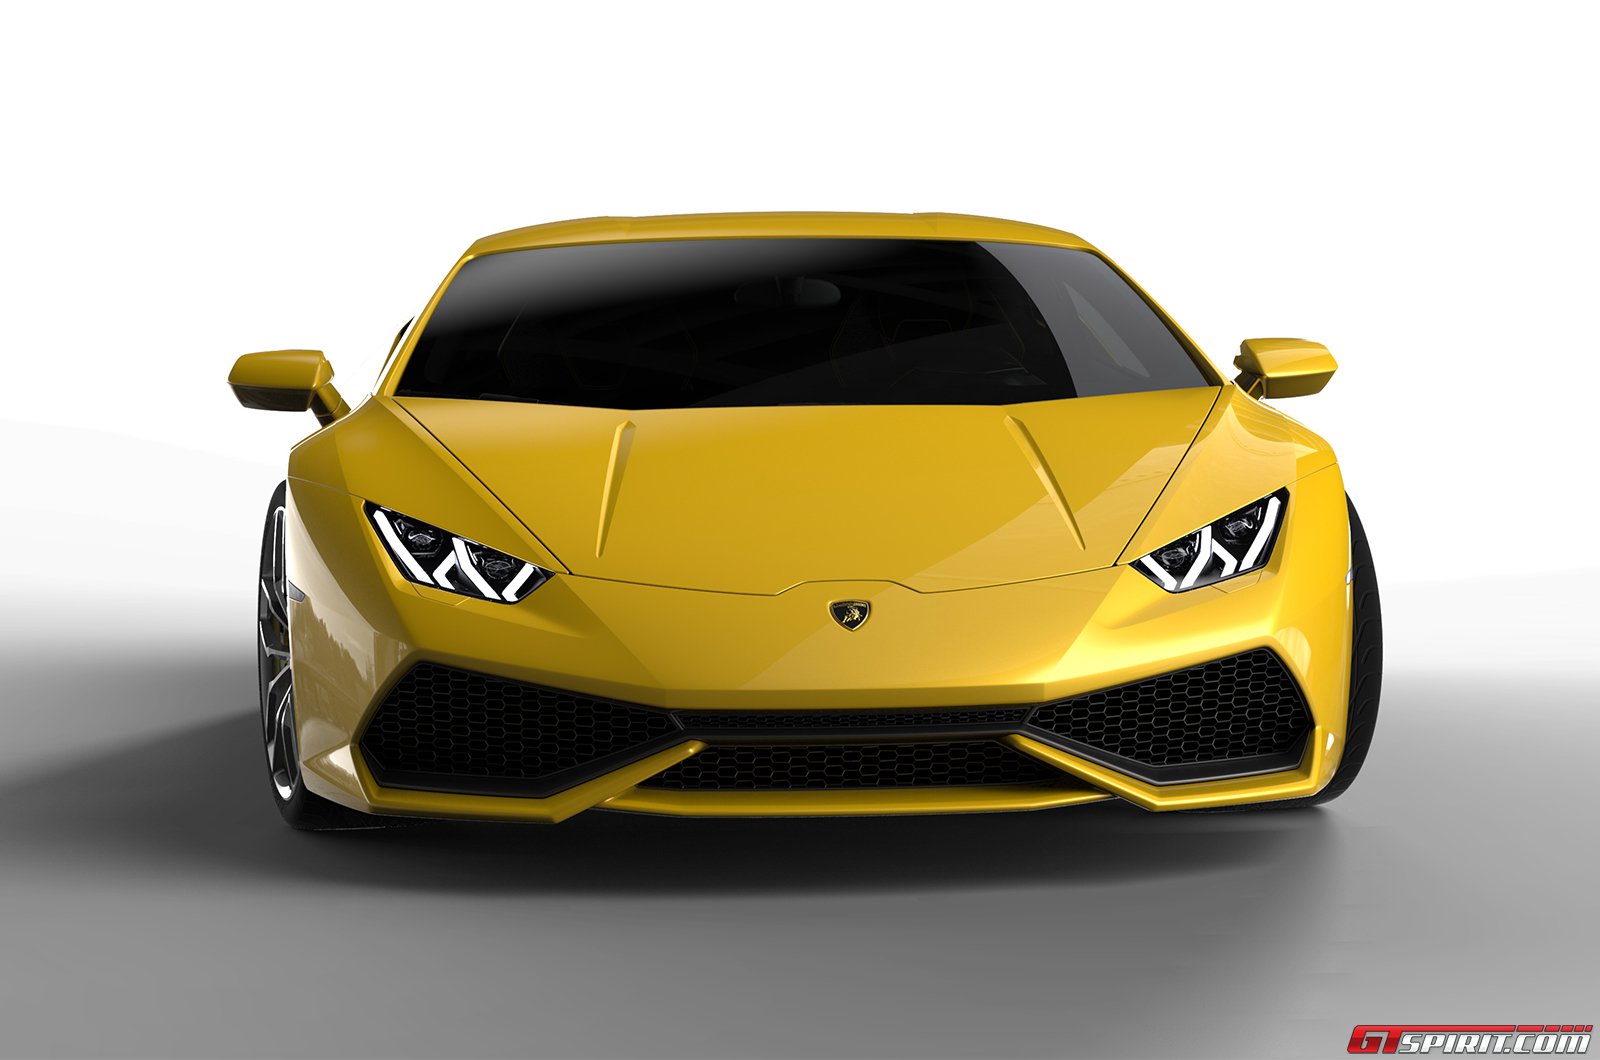 Lamborghini Huracan Pricing Details Revealed - GTspirit